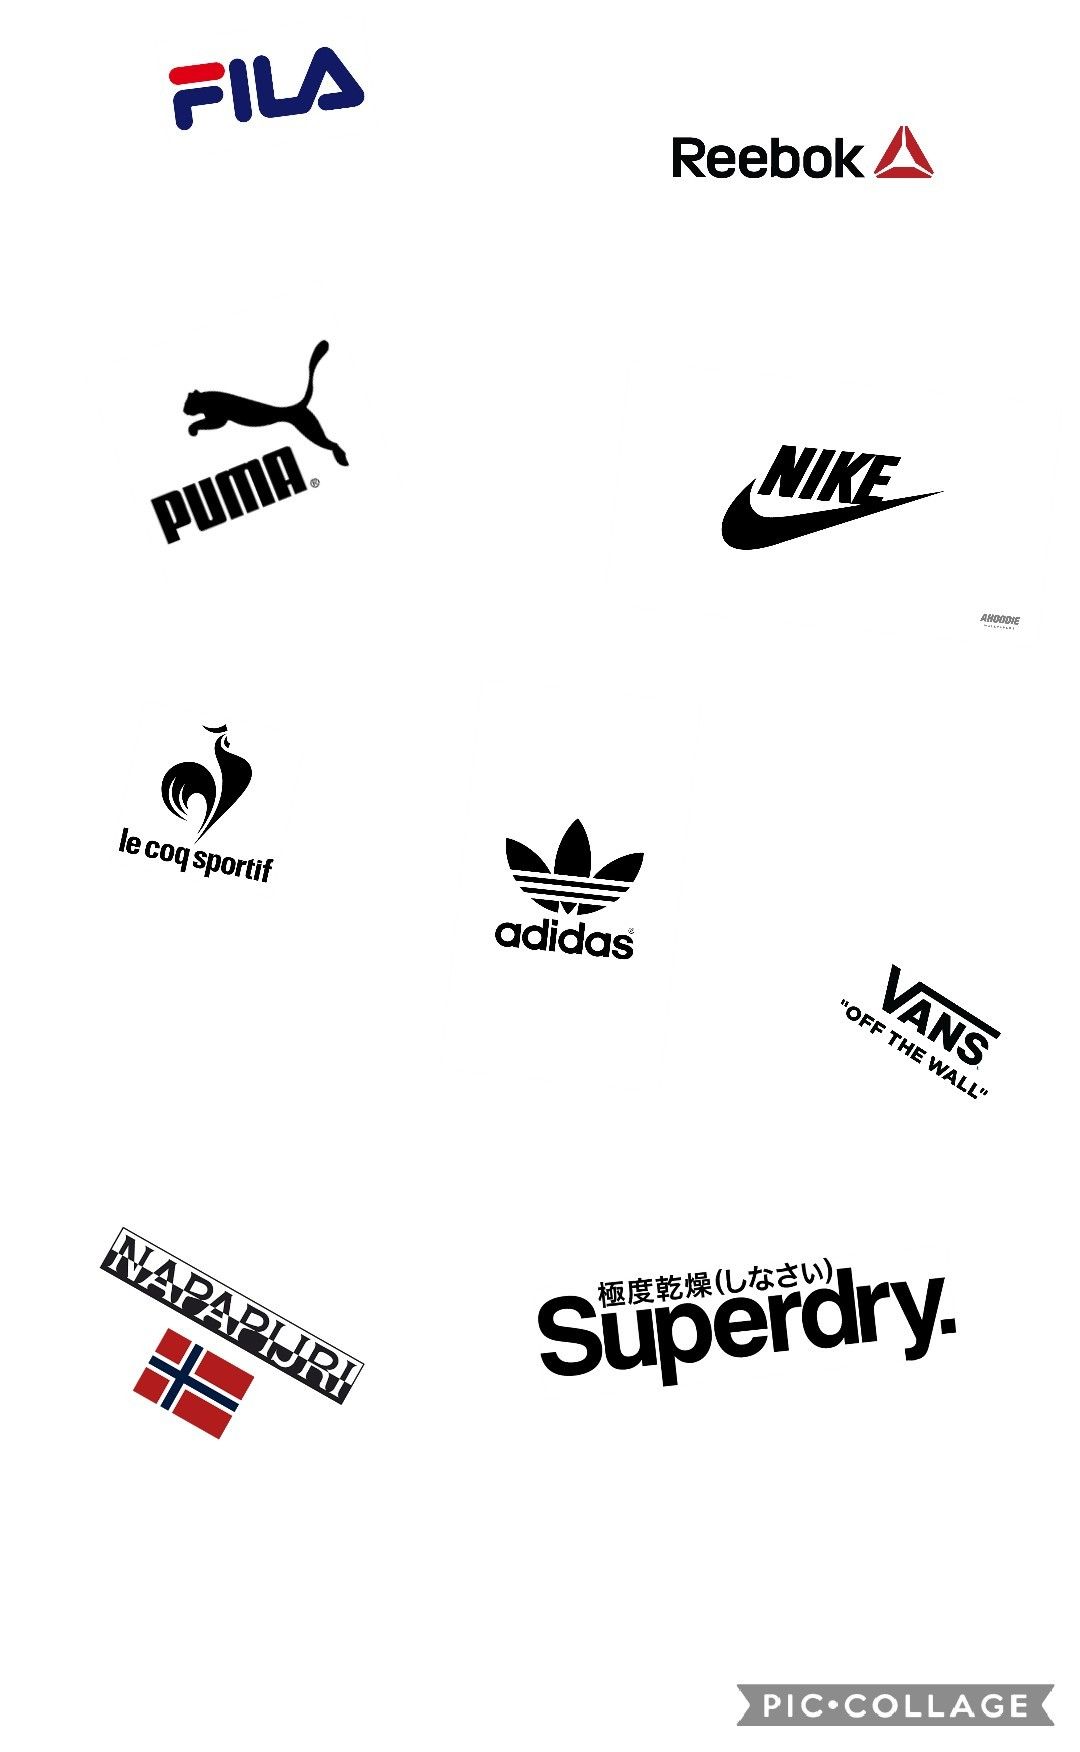 Wallpaper Puma, Nike, Le coque Sportif, Adidas, Vans, Napapijri, Superdry, Fila and Reebook / by. Adidas logo wallpaper, Shirt brand logos, Sports brand logos